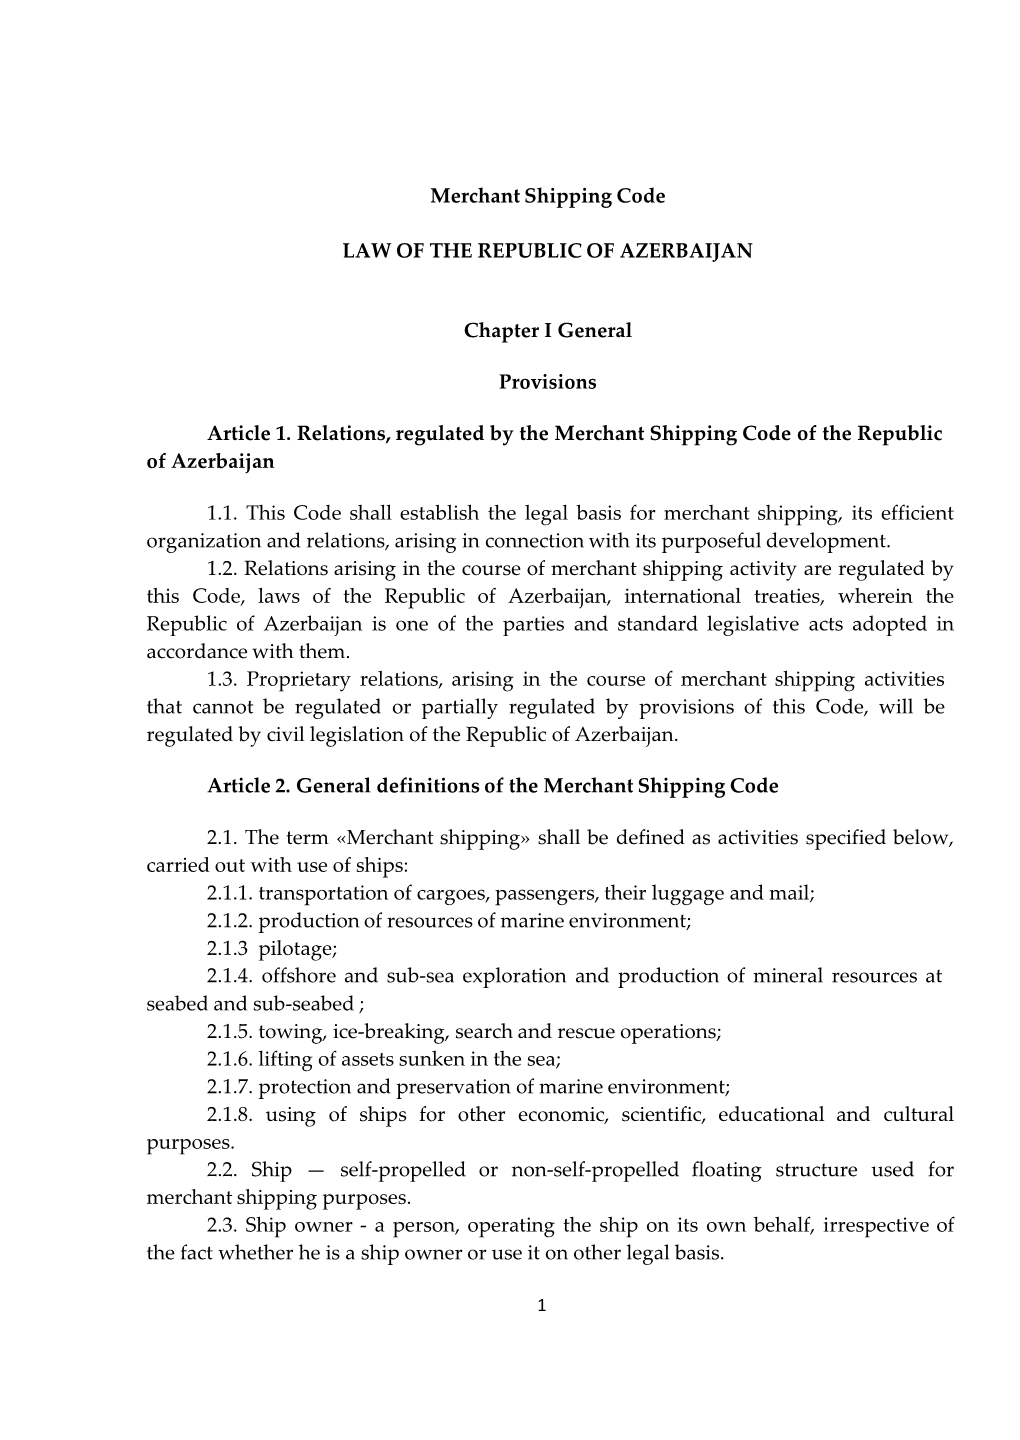 Merchant Shipping Code LAW of the REPUBLIC of AZERBAIJAN